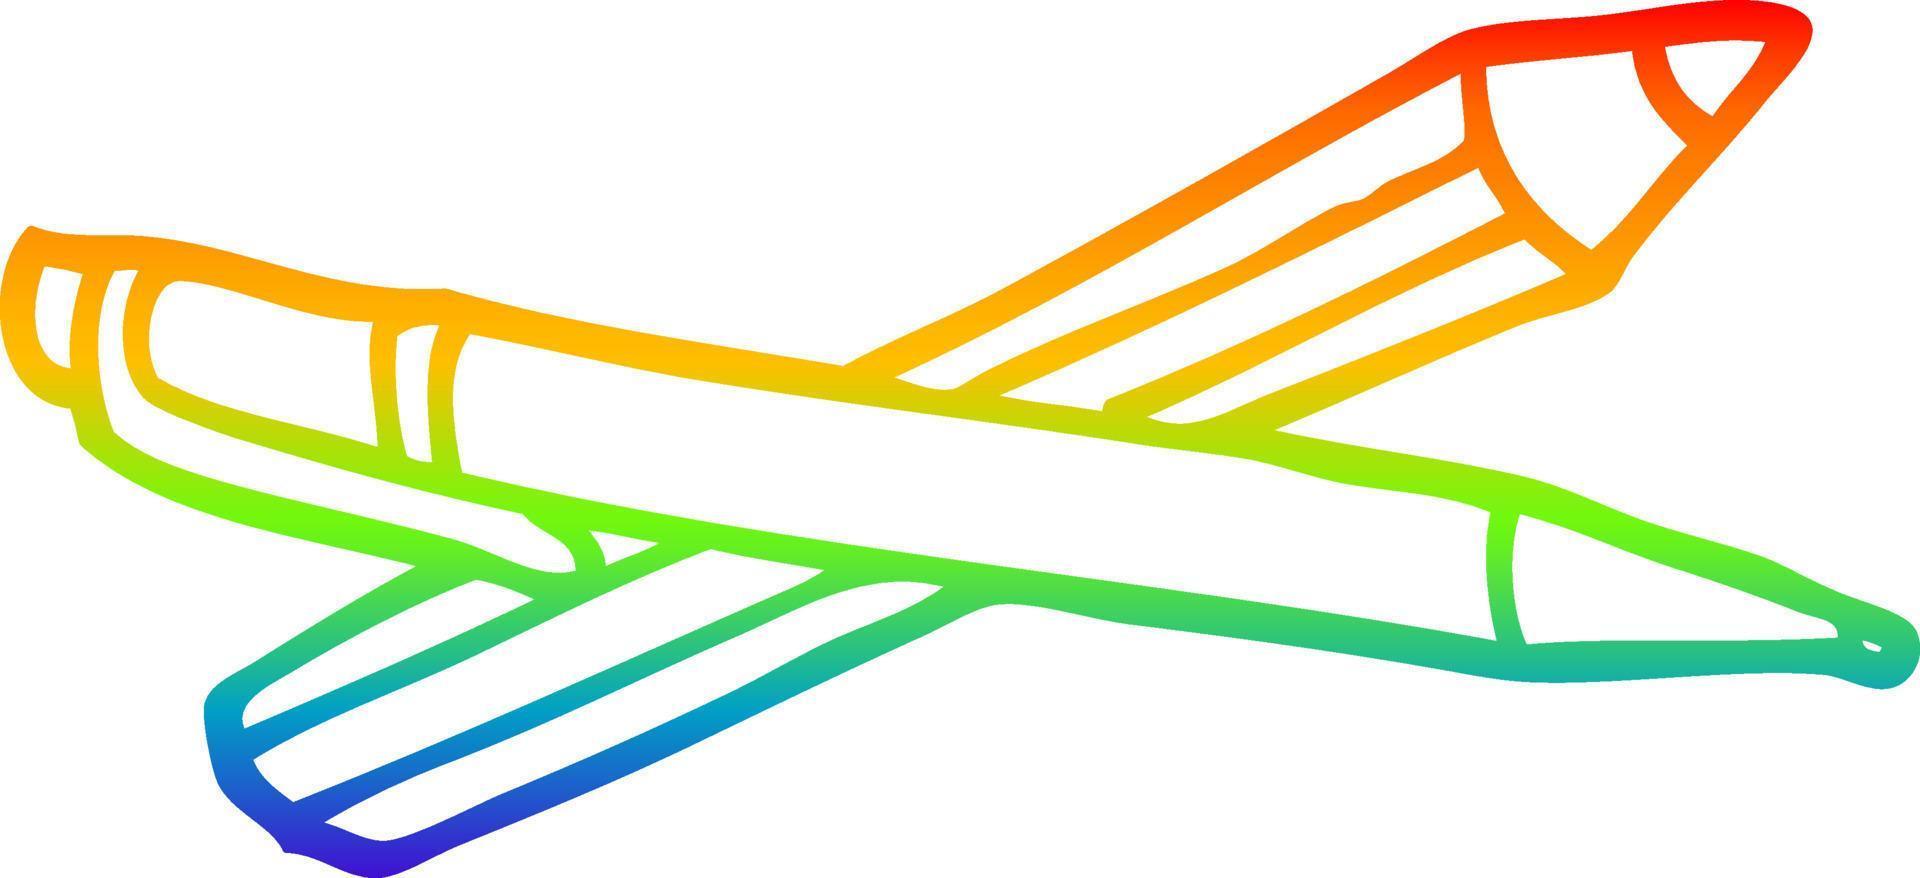 arco iris gradiente línea dibujo dibujos animados lápiz y pluma vector